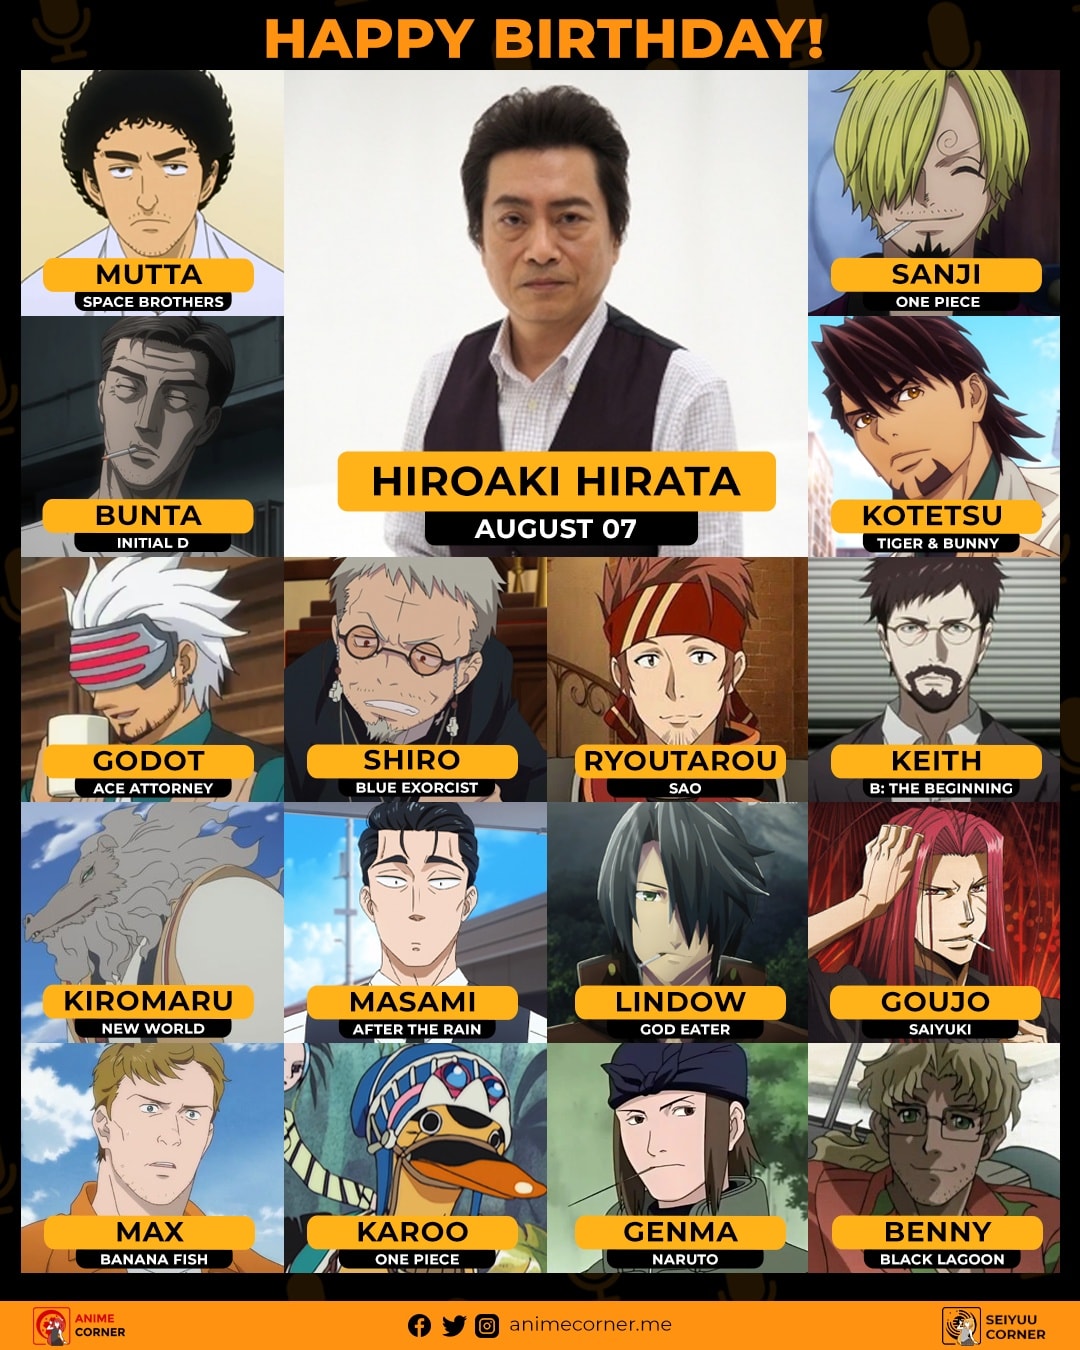 Anime Corner on X: Happy 58th birthday to Hiroaki Hirata! 🥳 He is the voice  actor of iconic characters like Sanji from One Piece, Kotetsu T. Kaburagi  from Tiger & Bunny, Ryotaro 